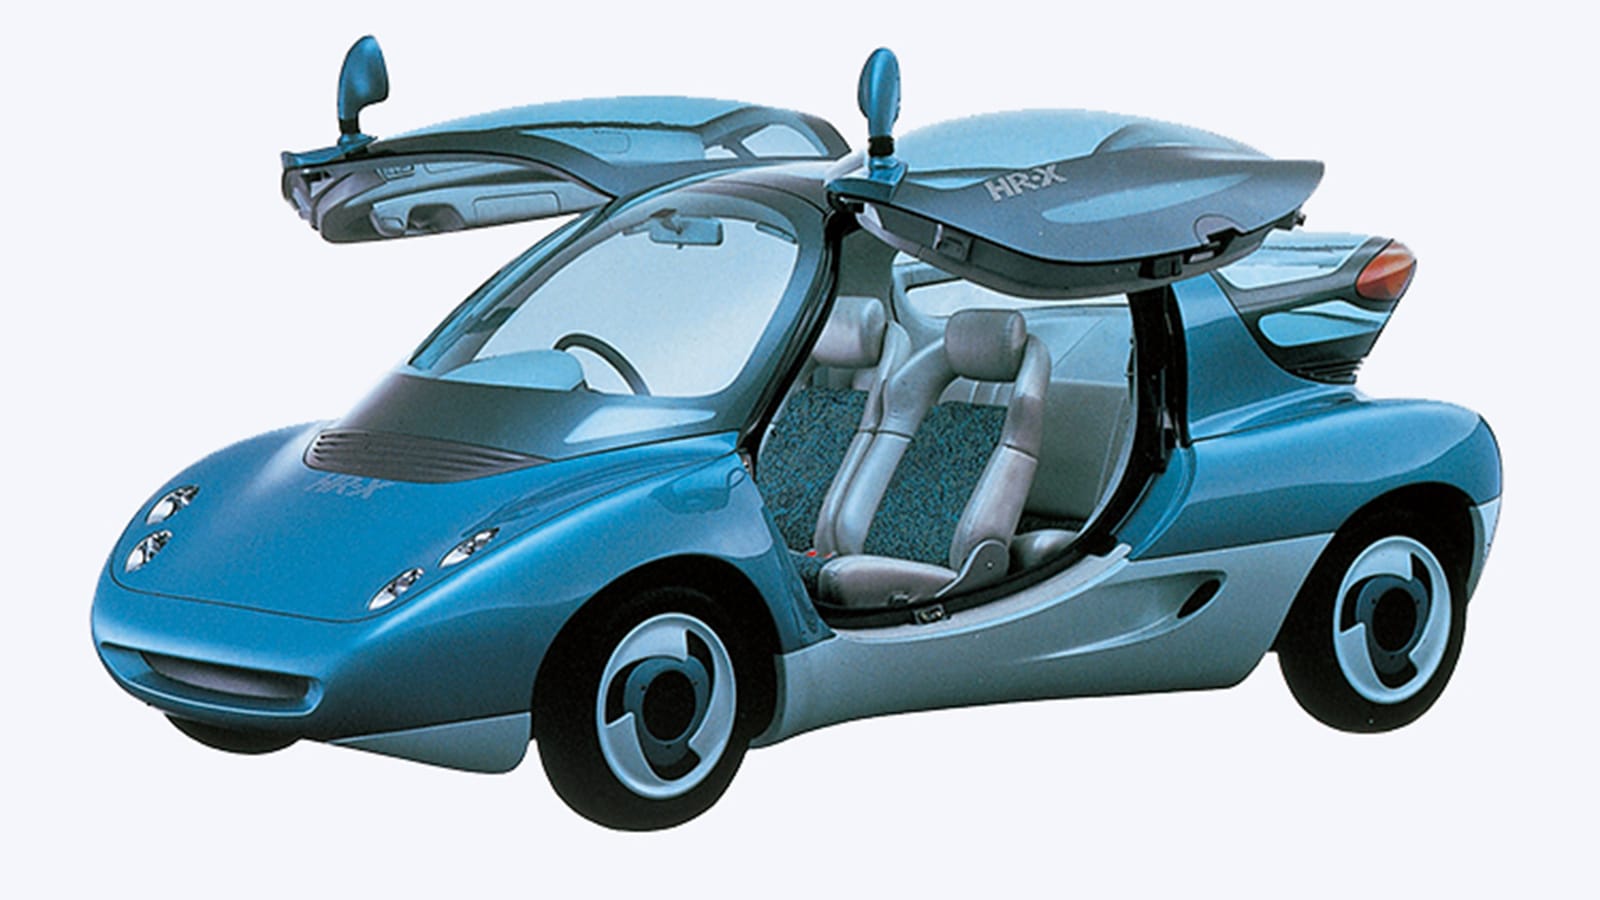 Konsep Mazda HR-X